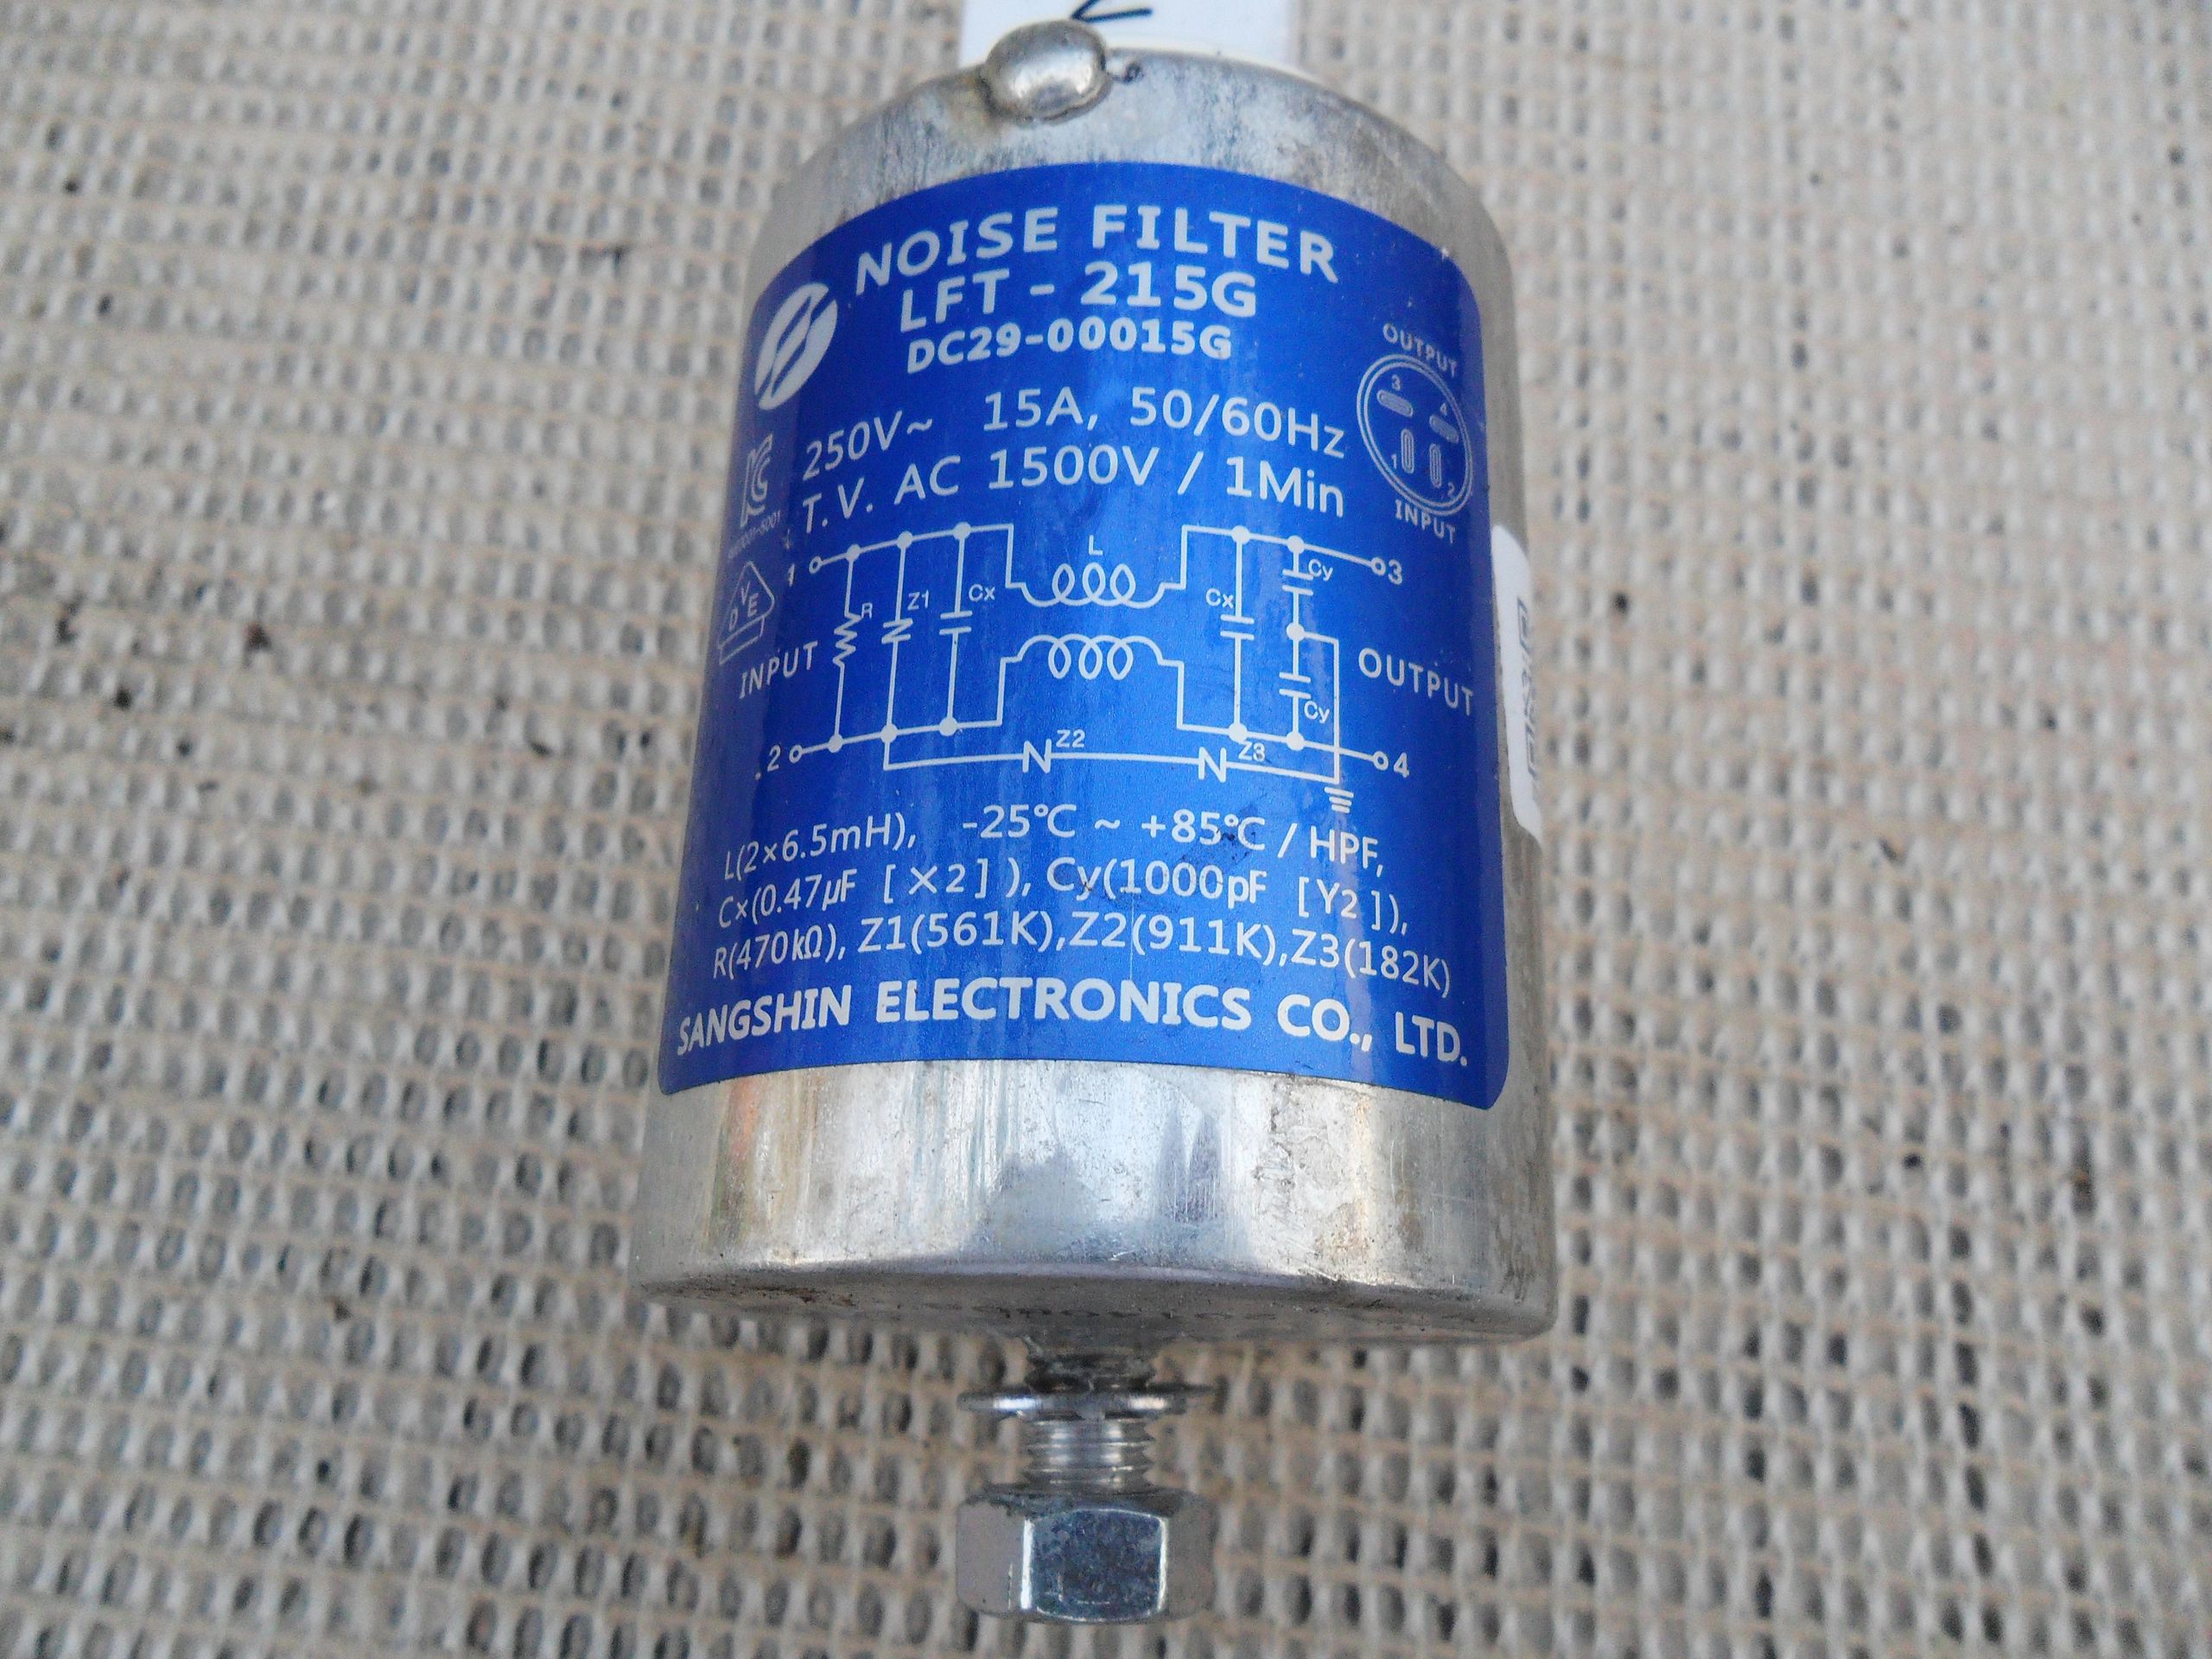 Samsung Washer Noise Filter DC29-00013B LFT-215G-1. 20% OFF SALE